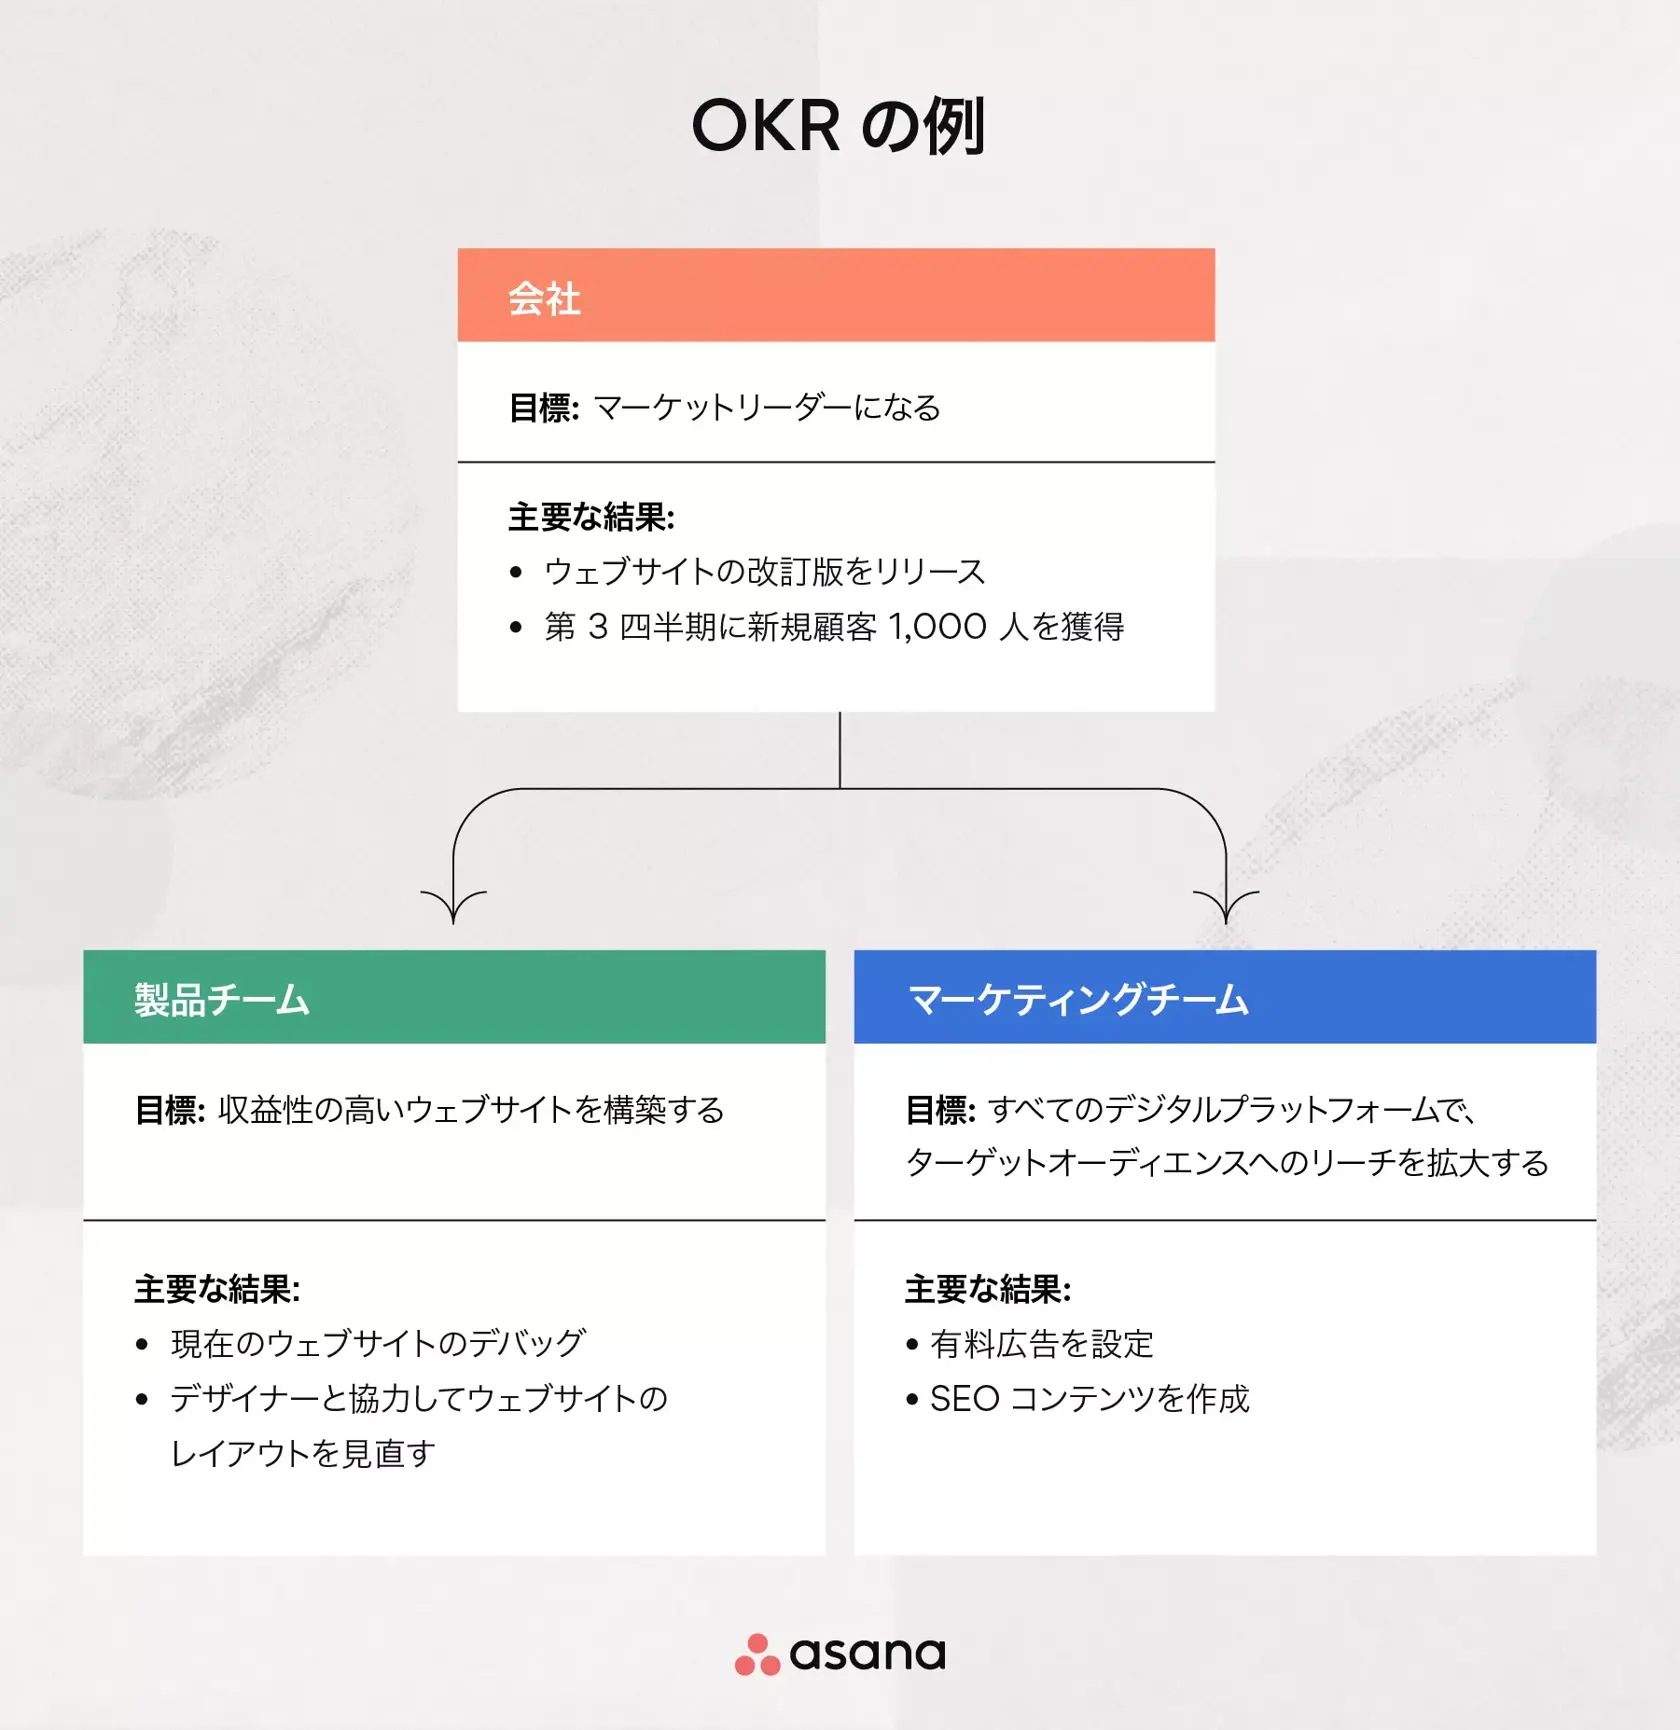 OKR の例